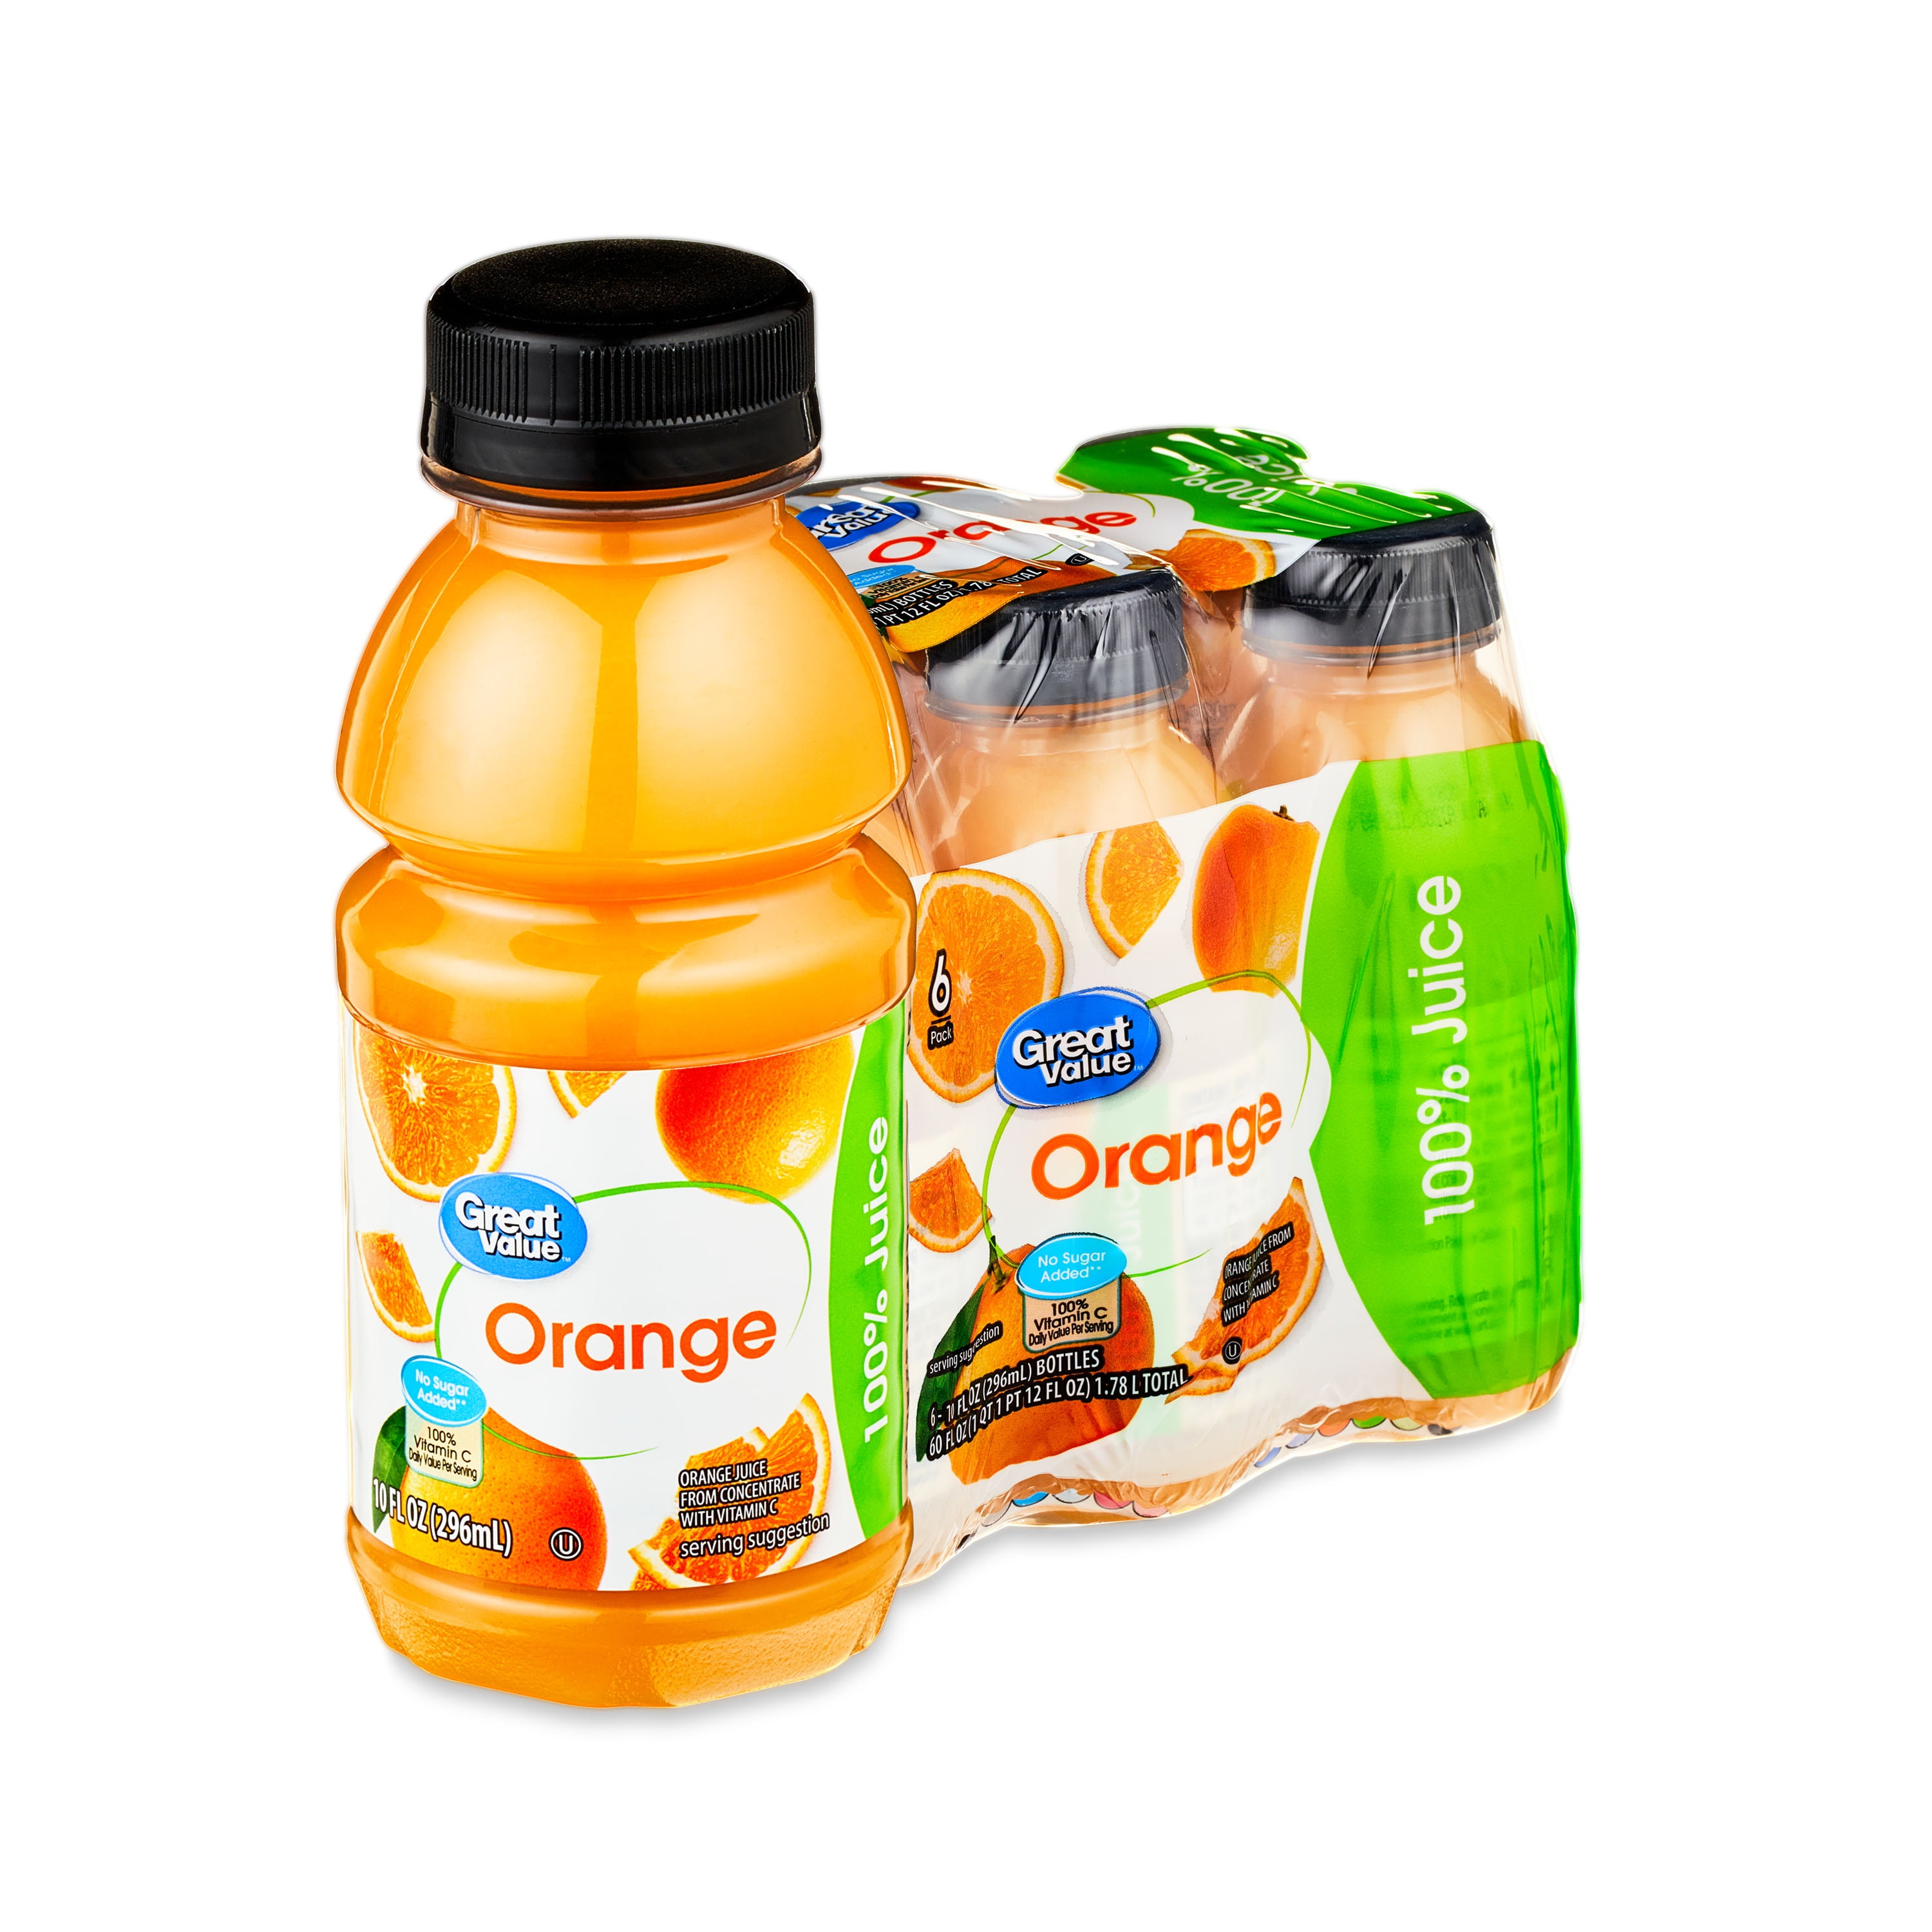 Dole Orange Juice - 15.2 oz 12 pk